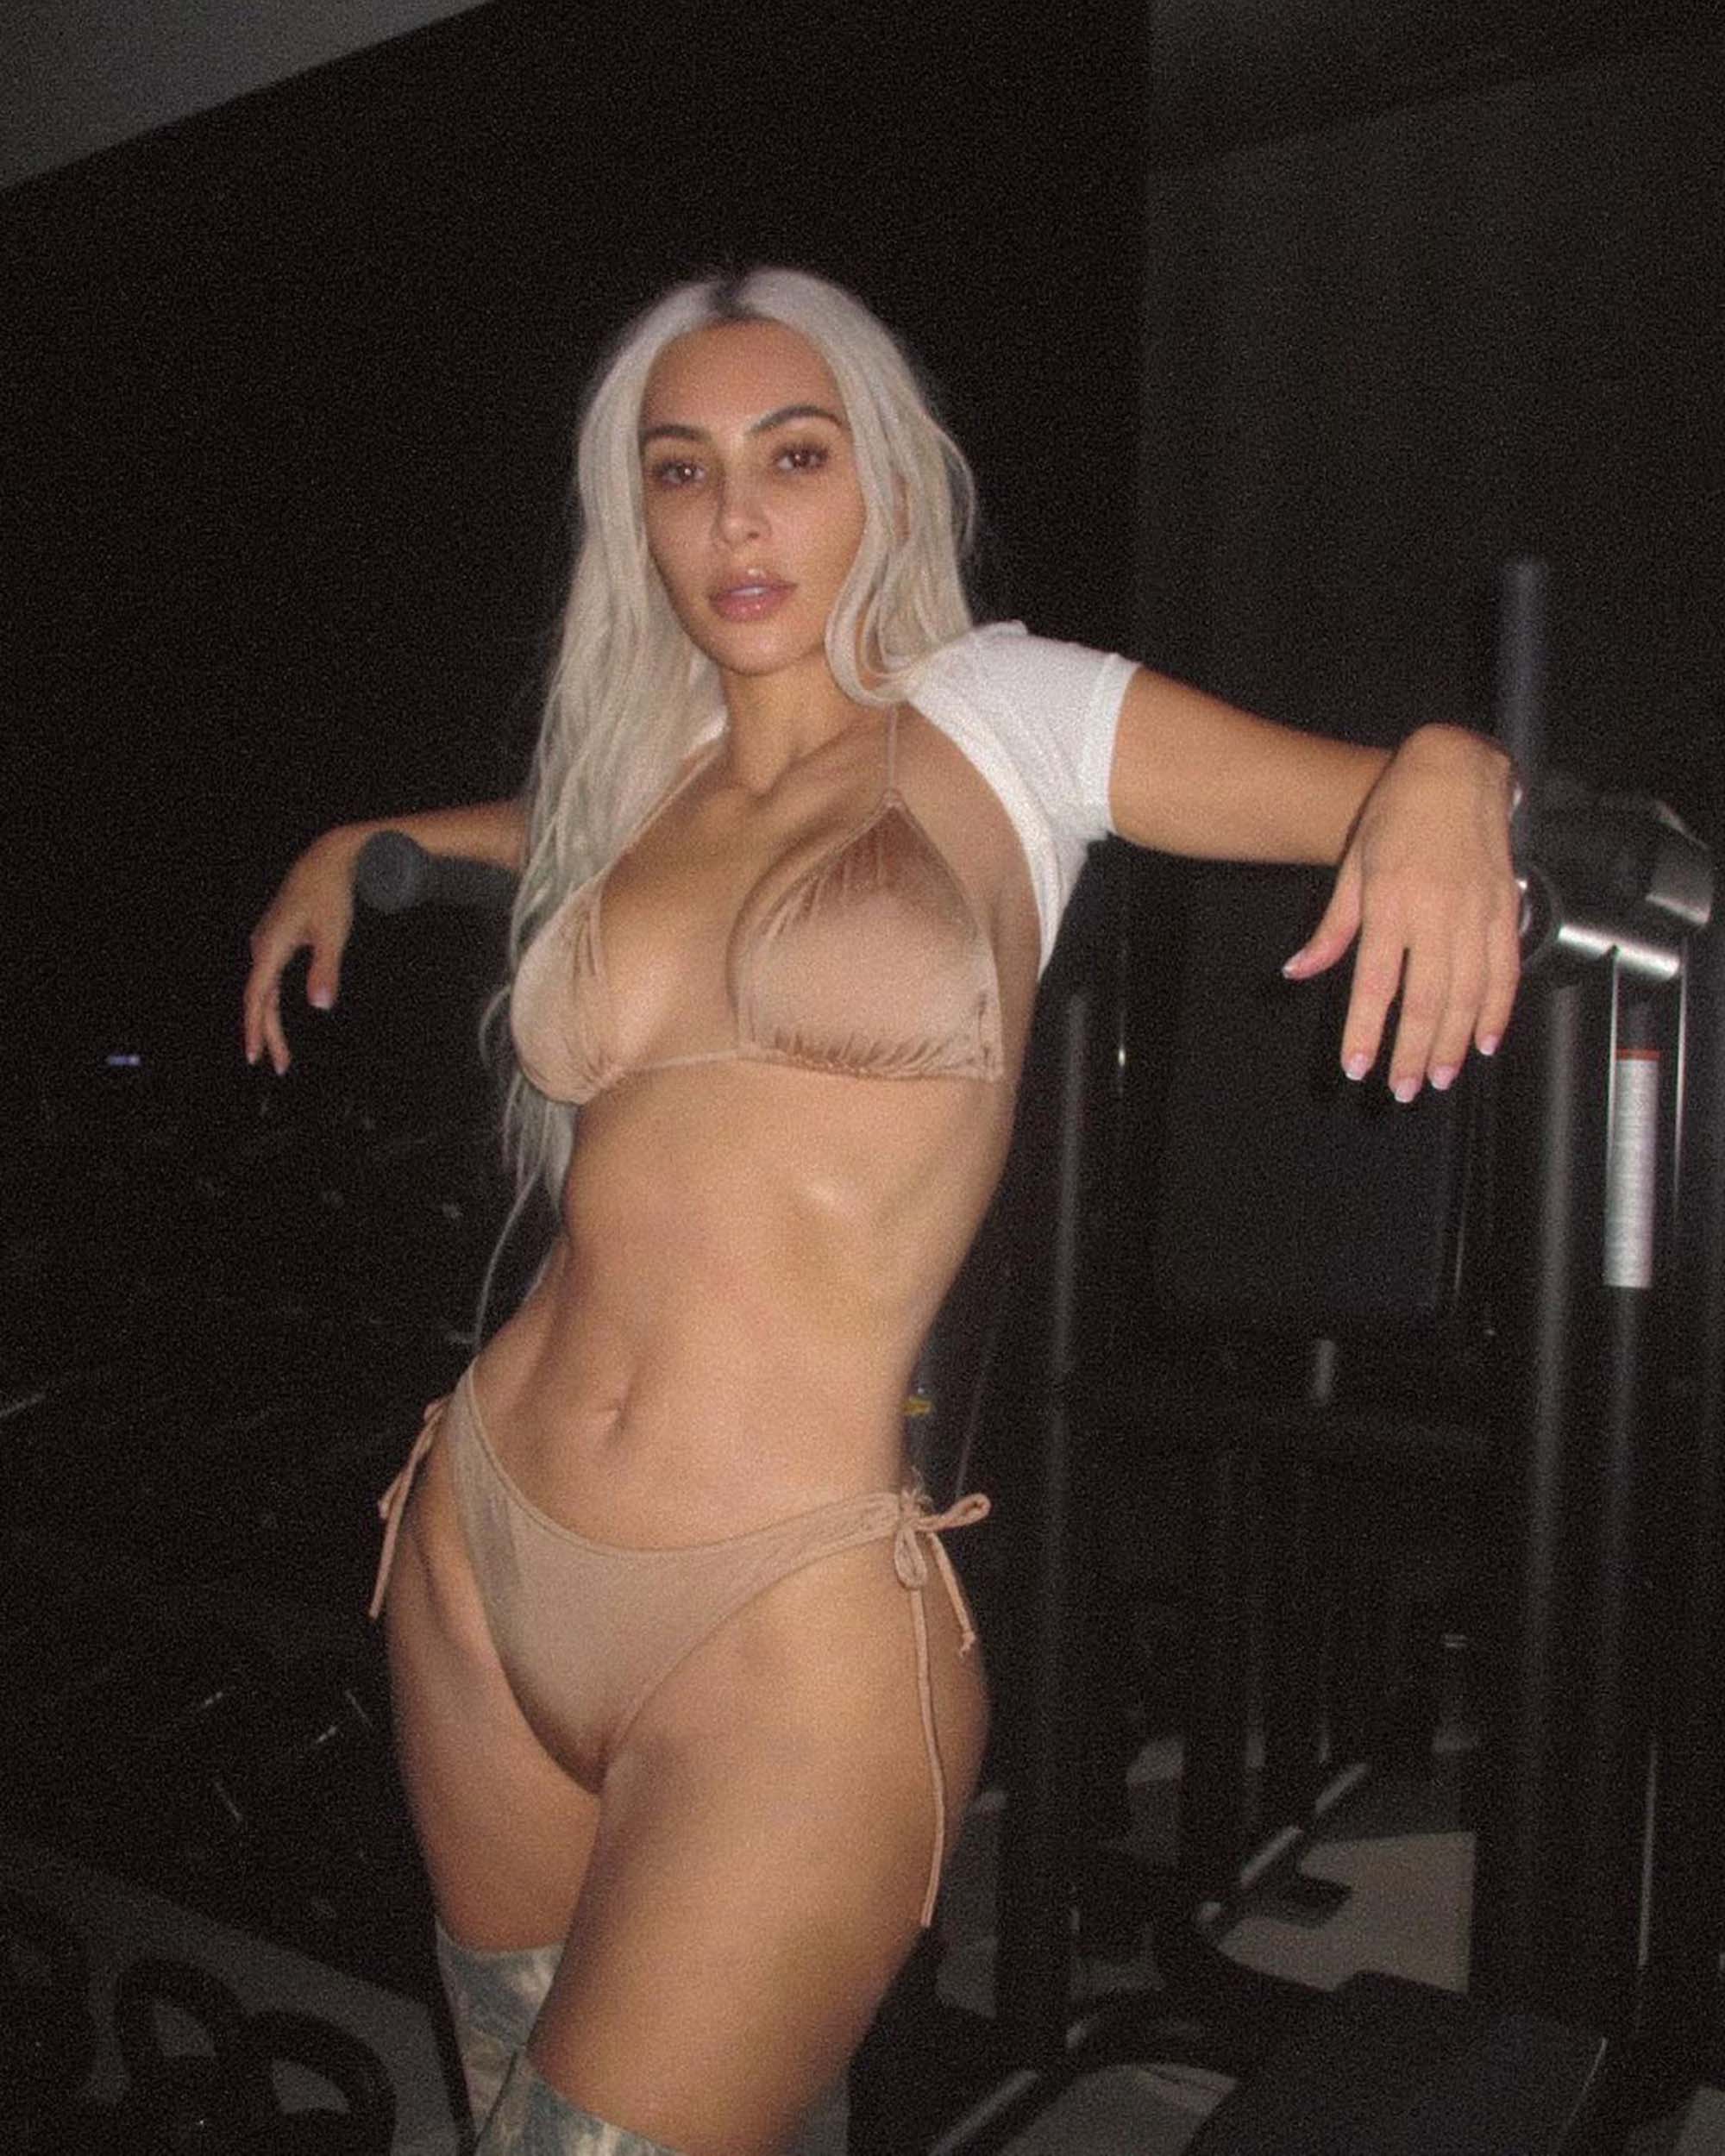 carrico share kim kardashian tits naked photos